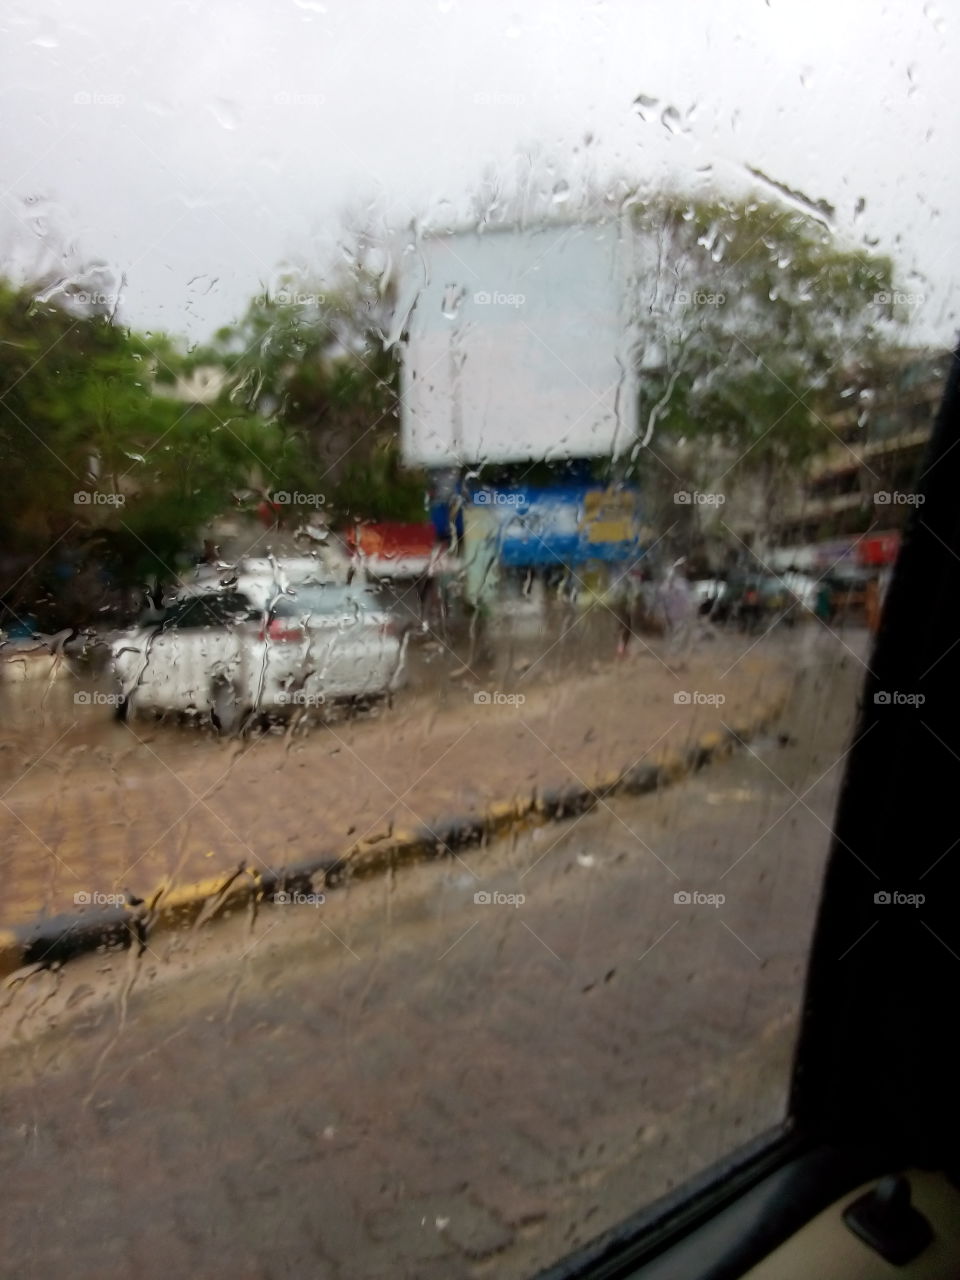 Mumbai. Rainy Mumbai